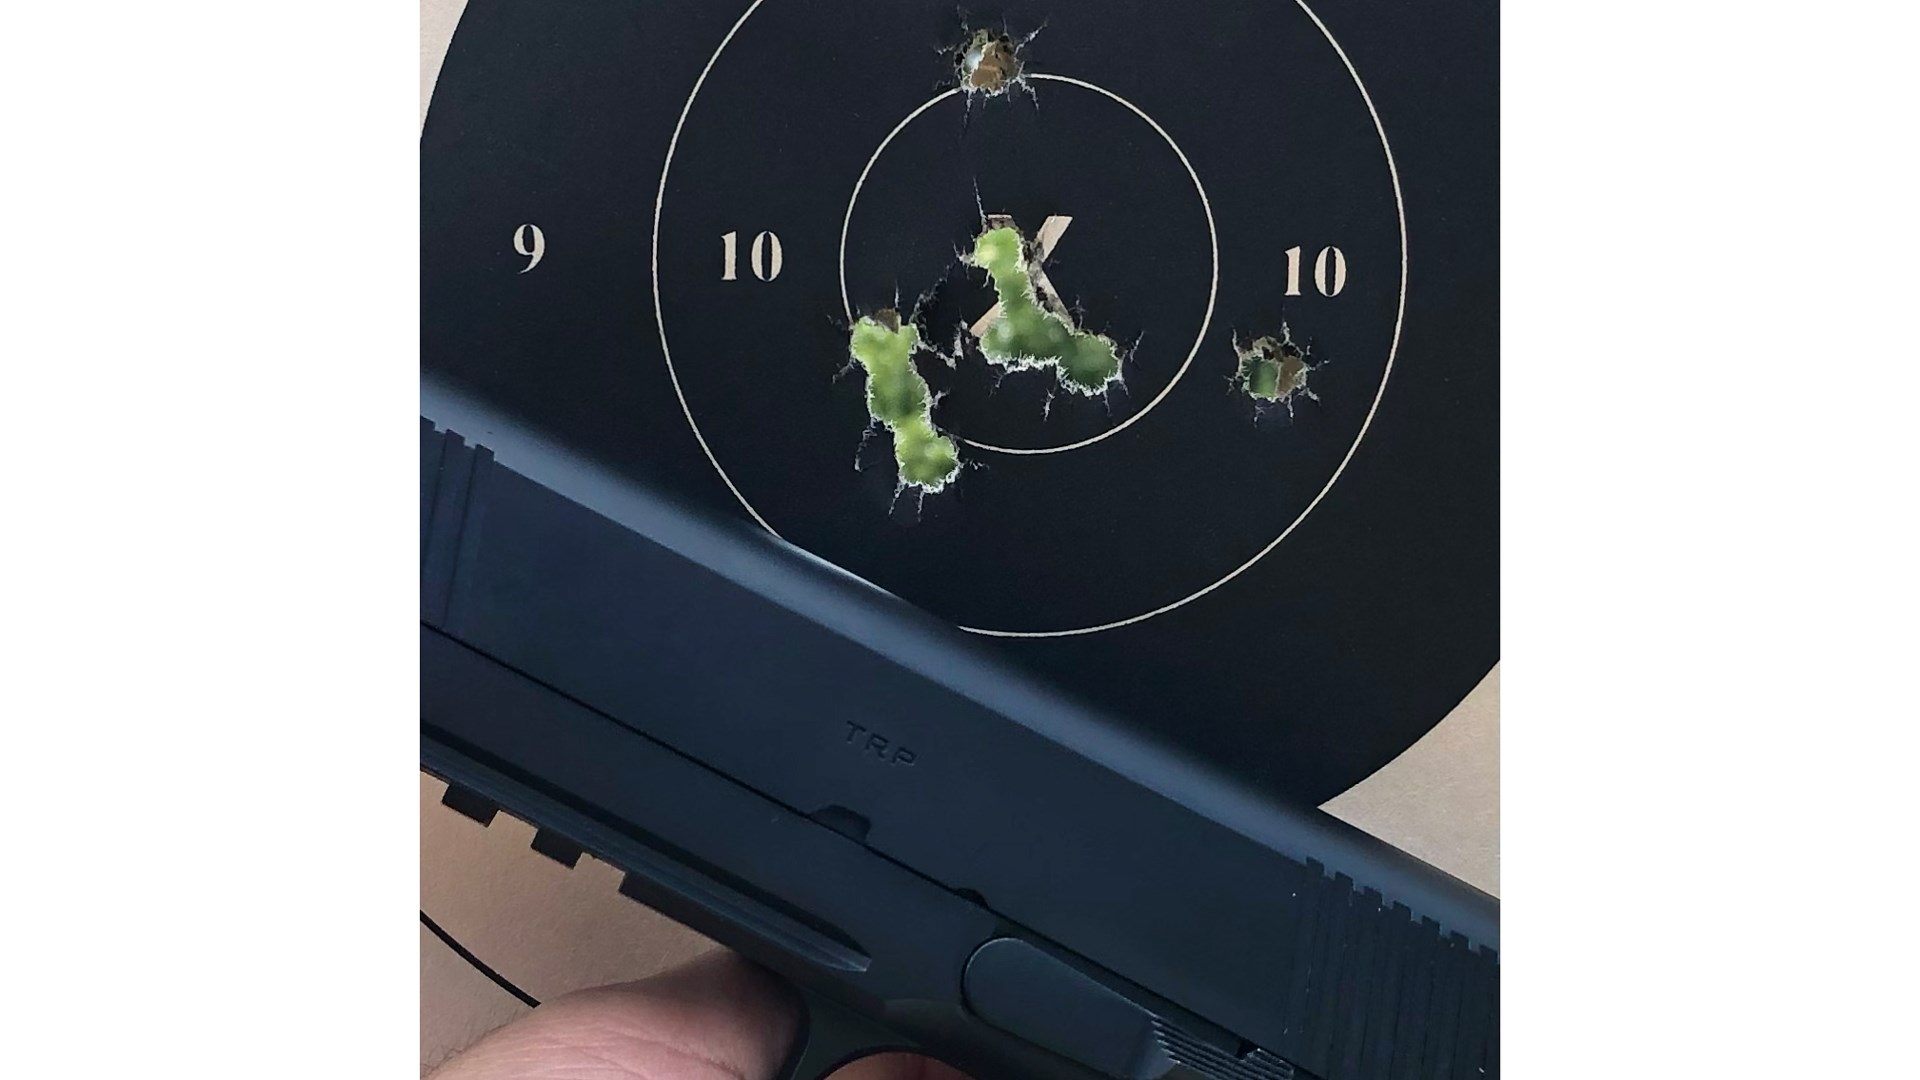 Springfield armory TRP 1911 bullseye group target holes accuracy black gun 1911